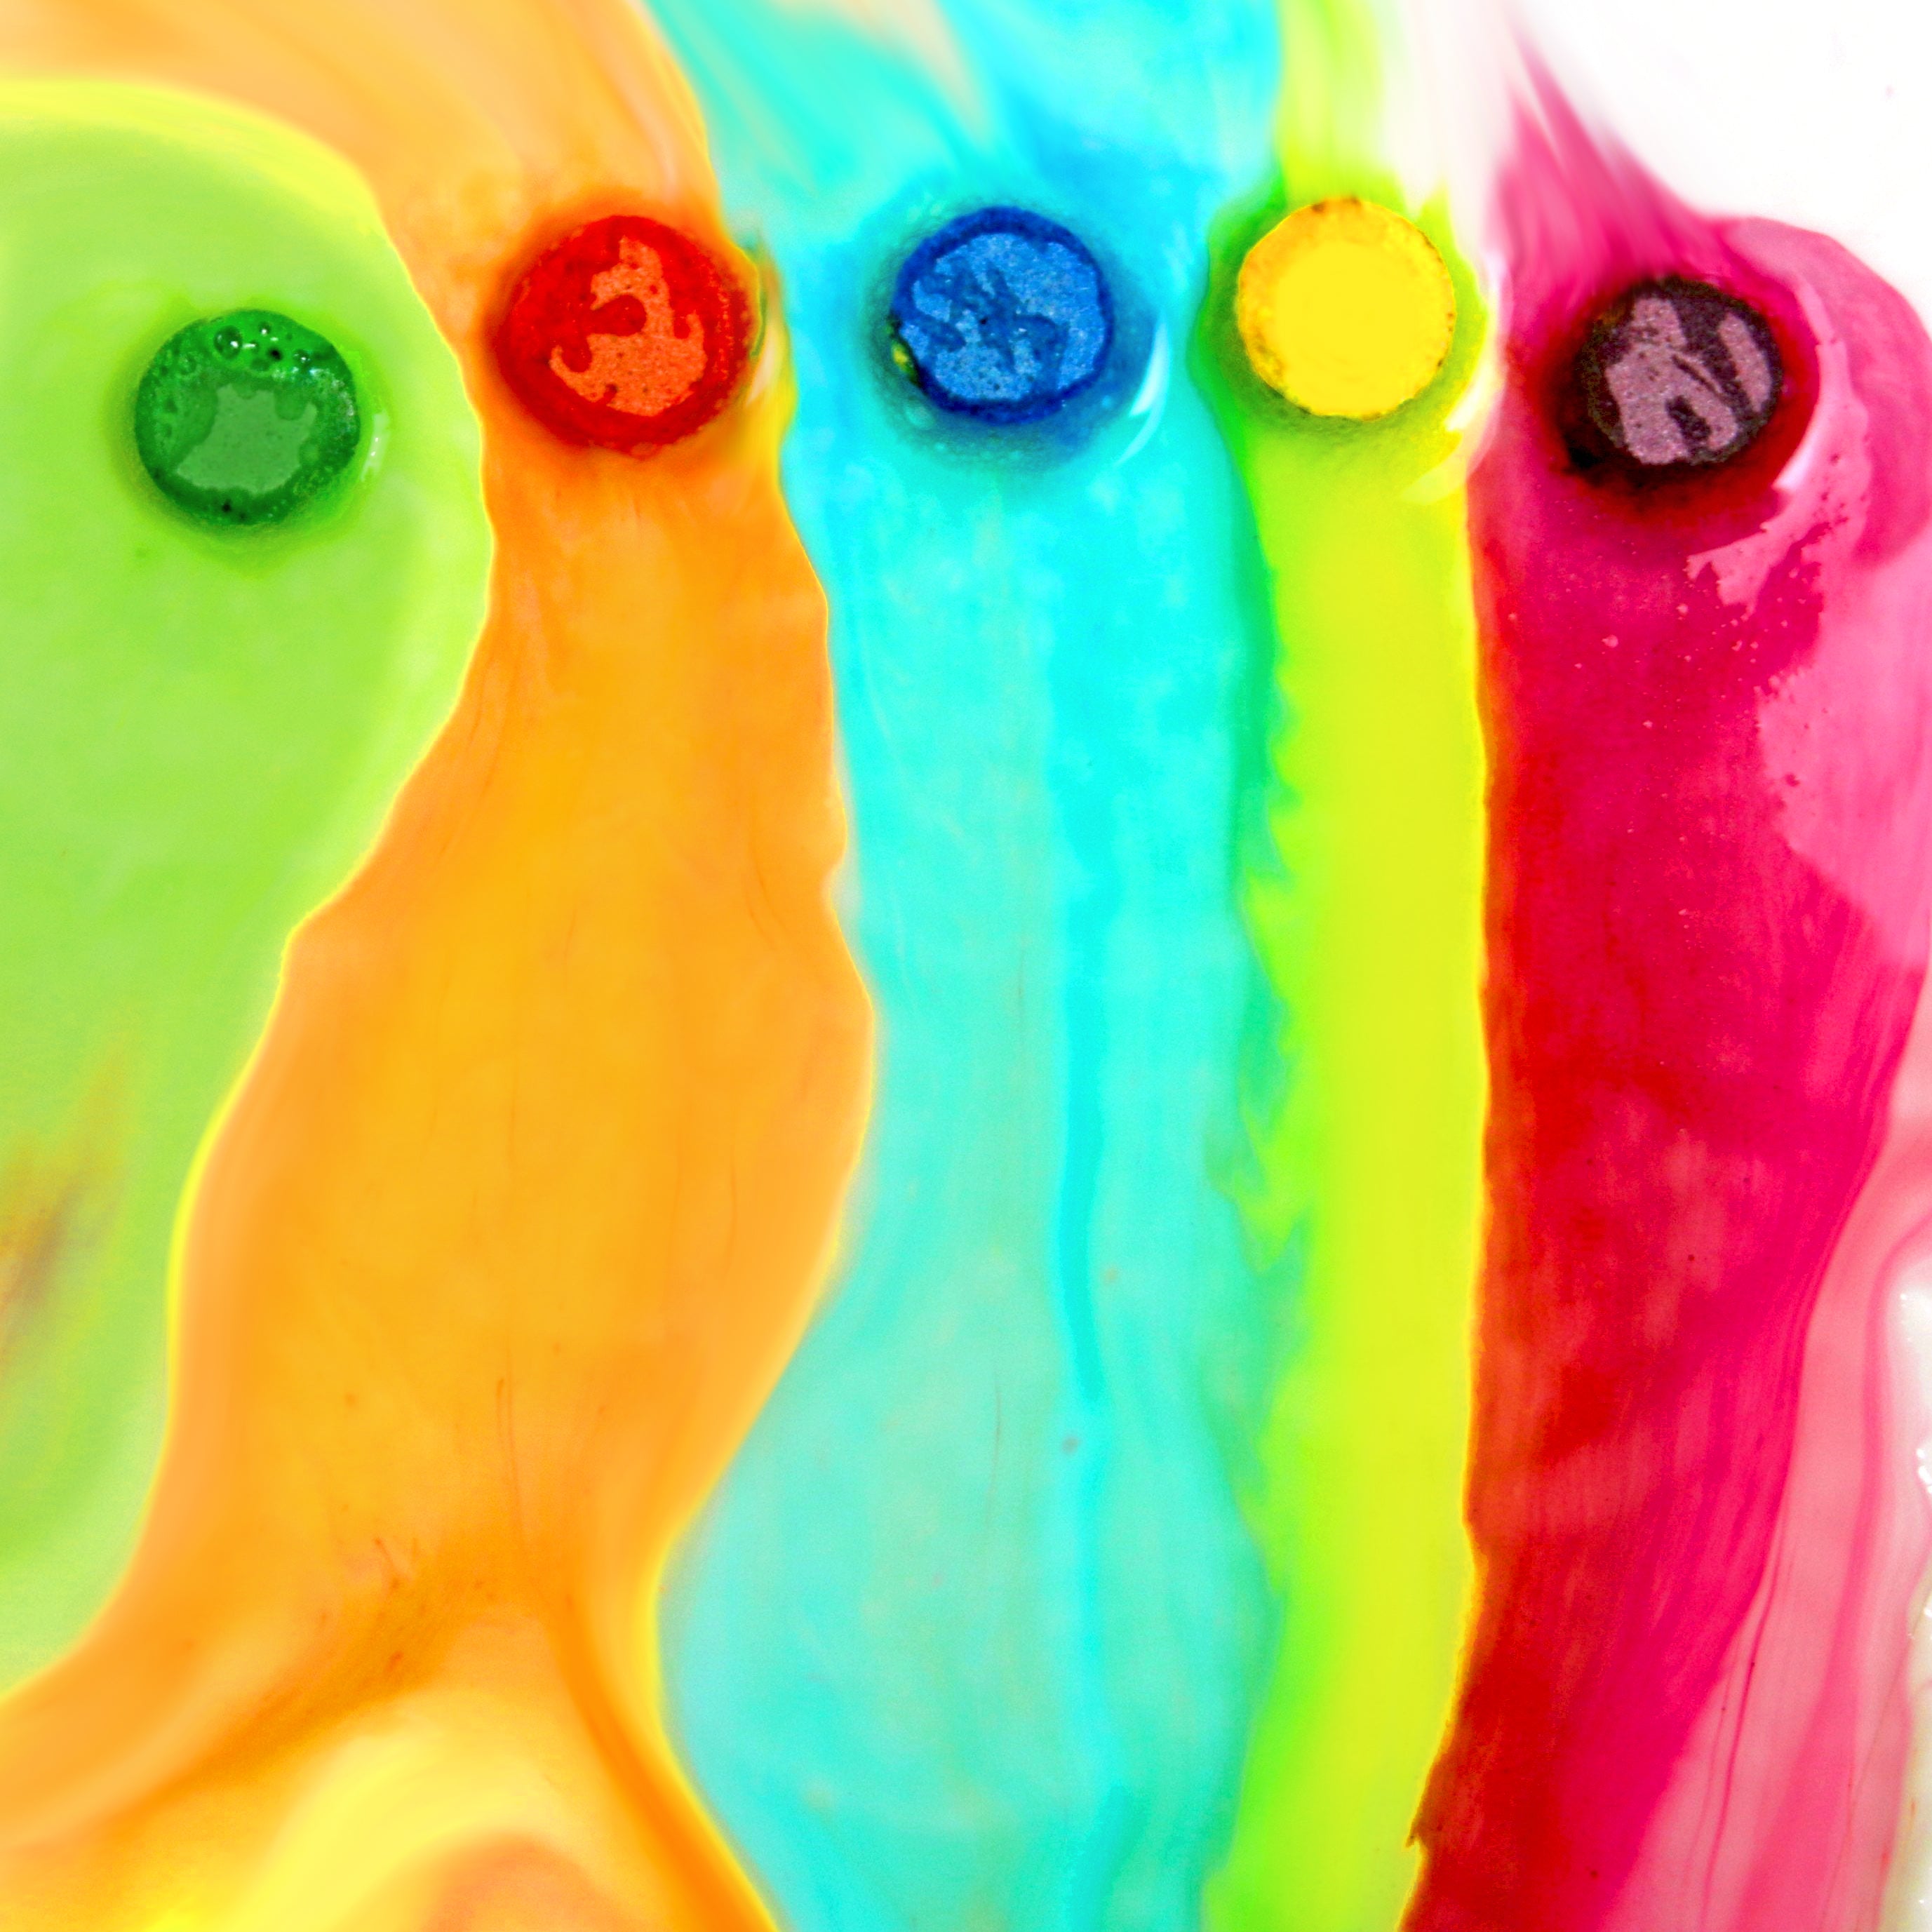  Tub Works Fizzy Bath Color Tablets & Bath Slime Soap, Nontoxic, Create Fun Bath Colors with 7 Colors of Bath Drops